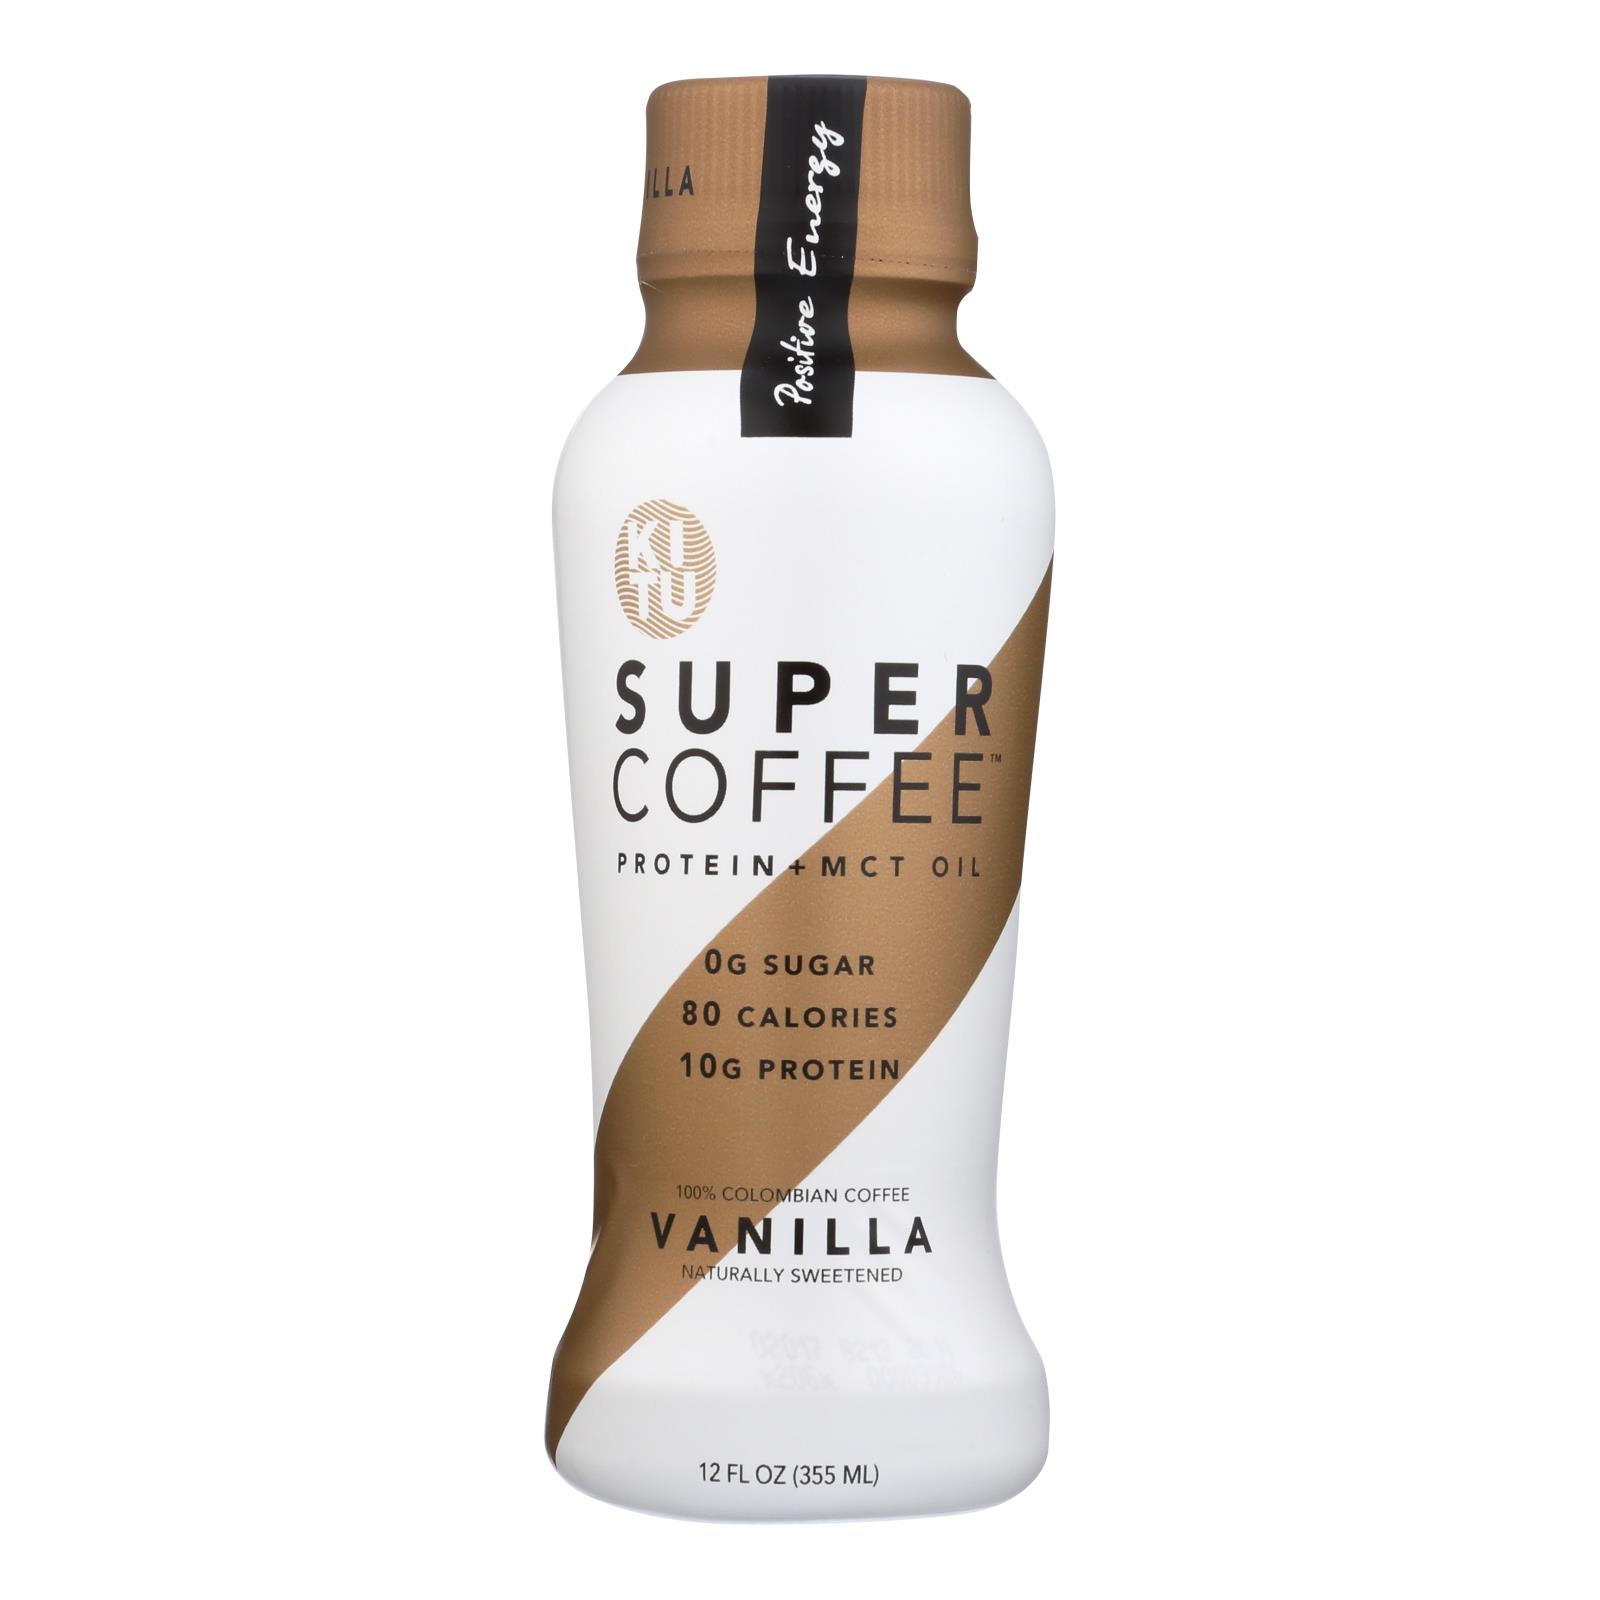 Kitu Life Super Coffee - 12개 묶음상품 - 12 FZ